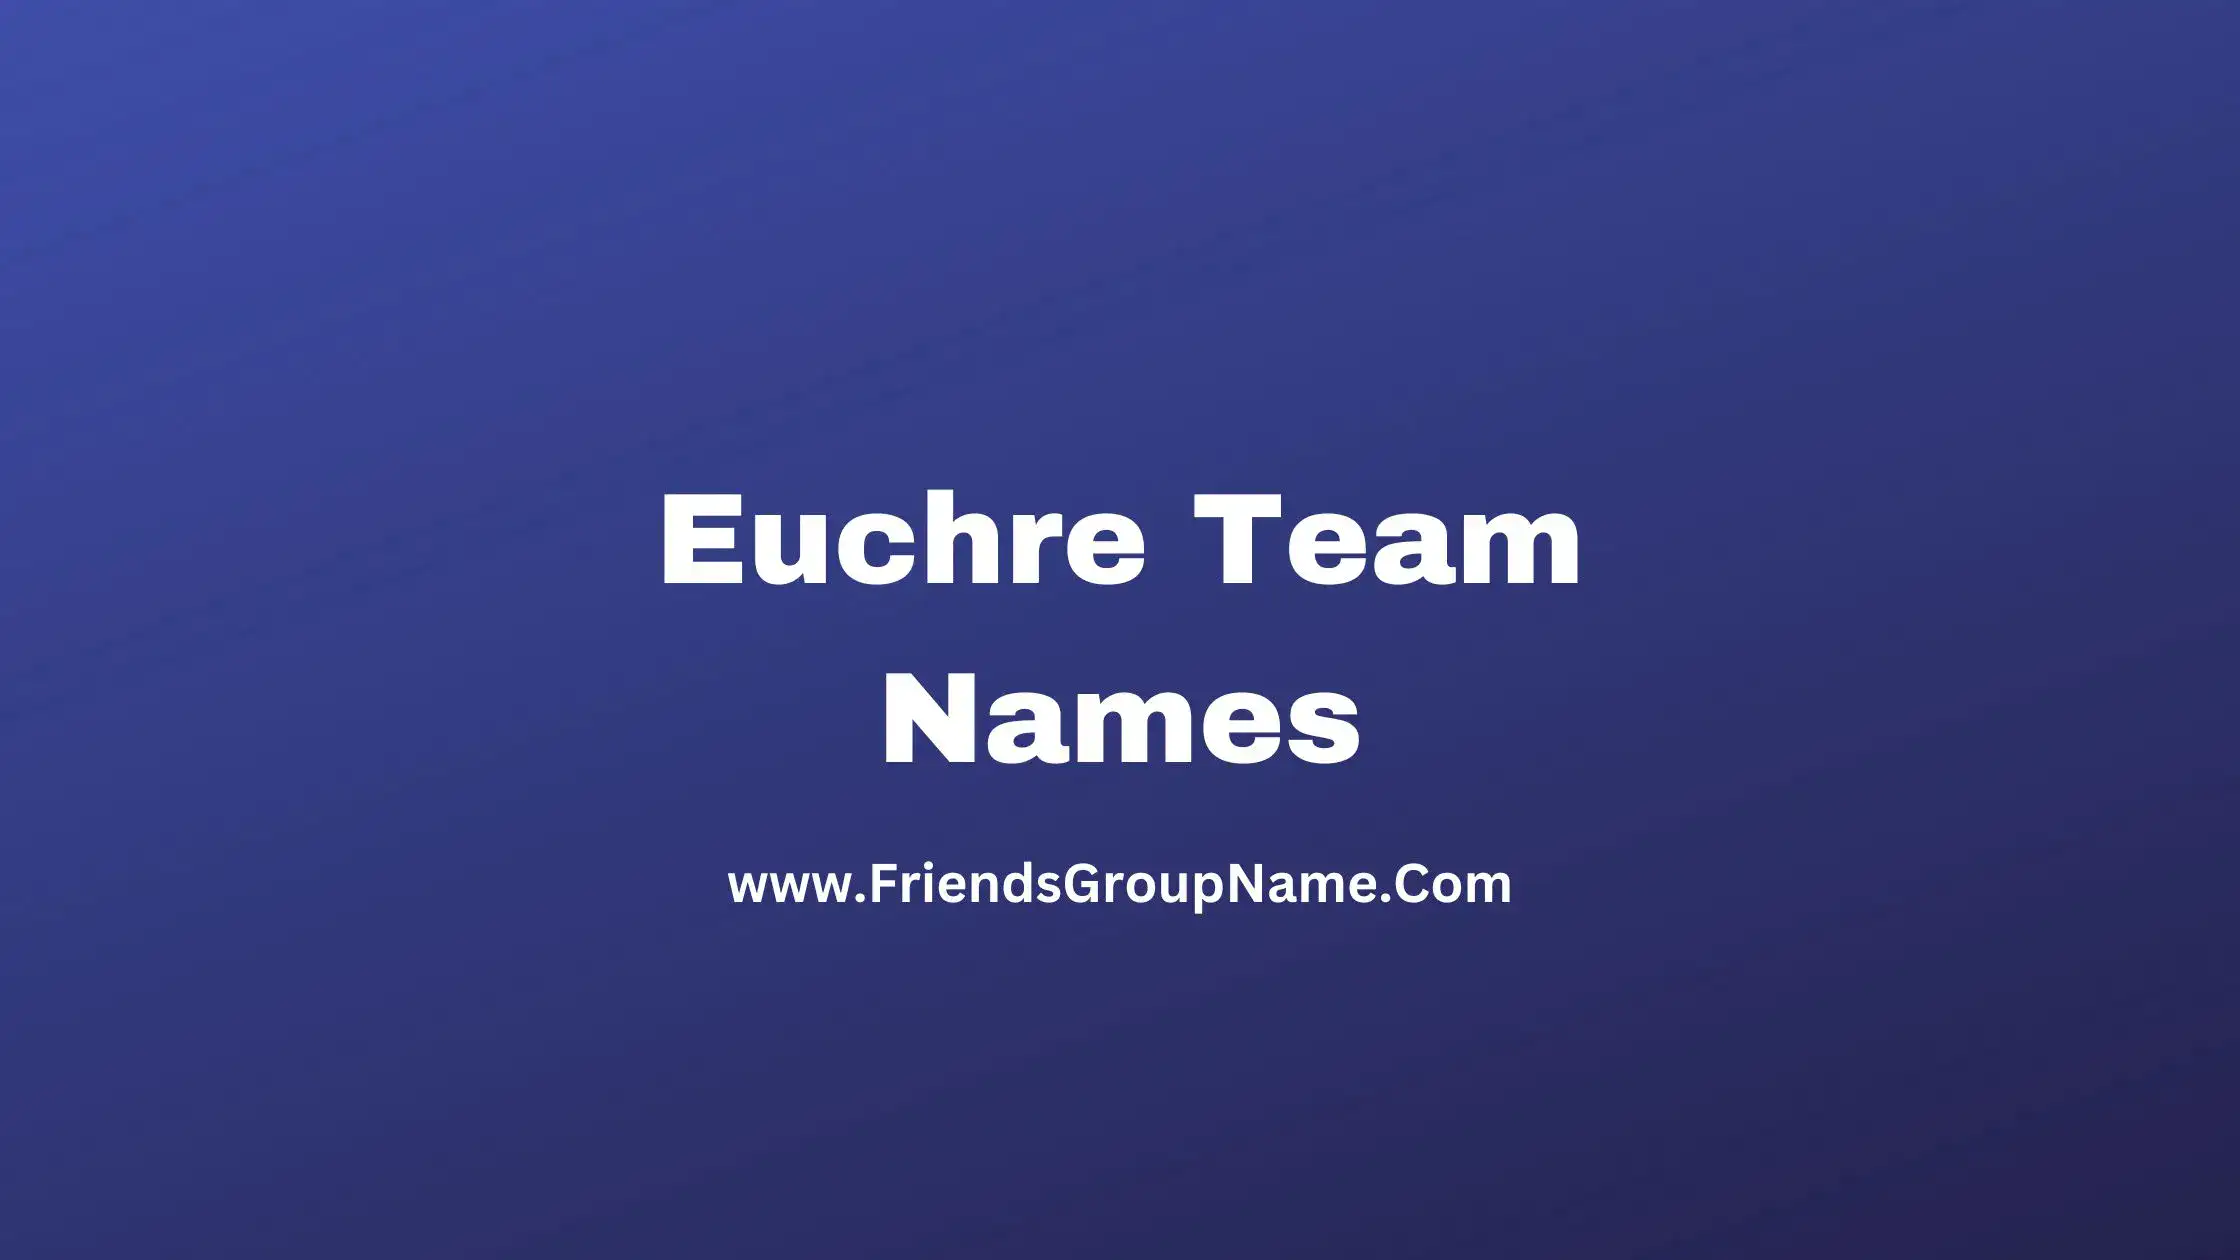 Euchre Team Names